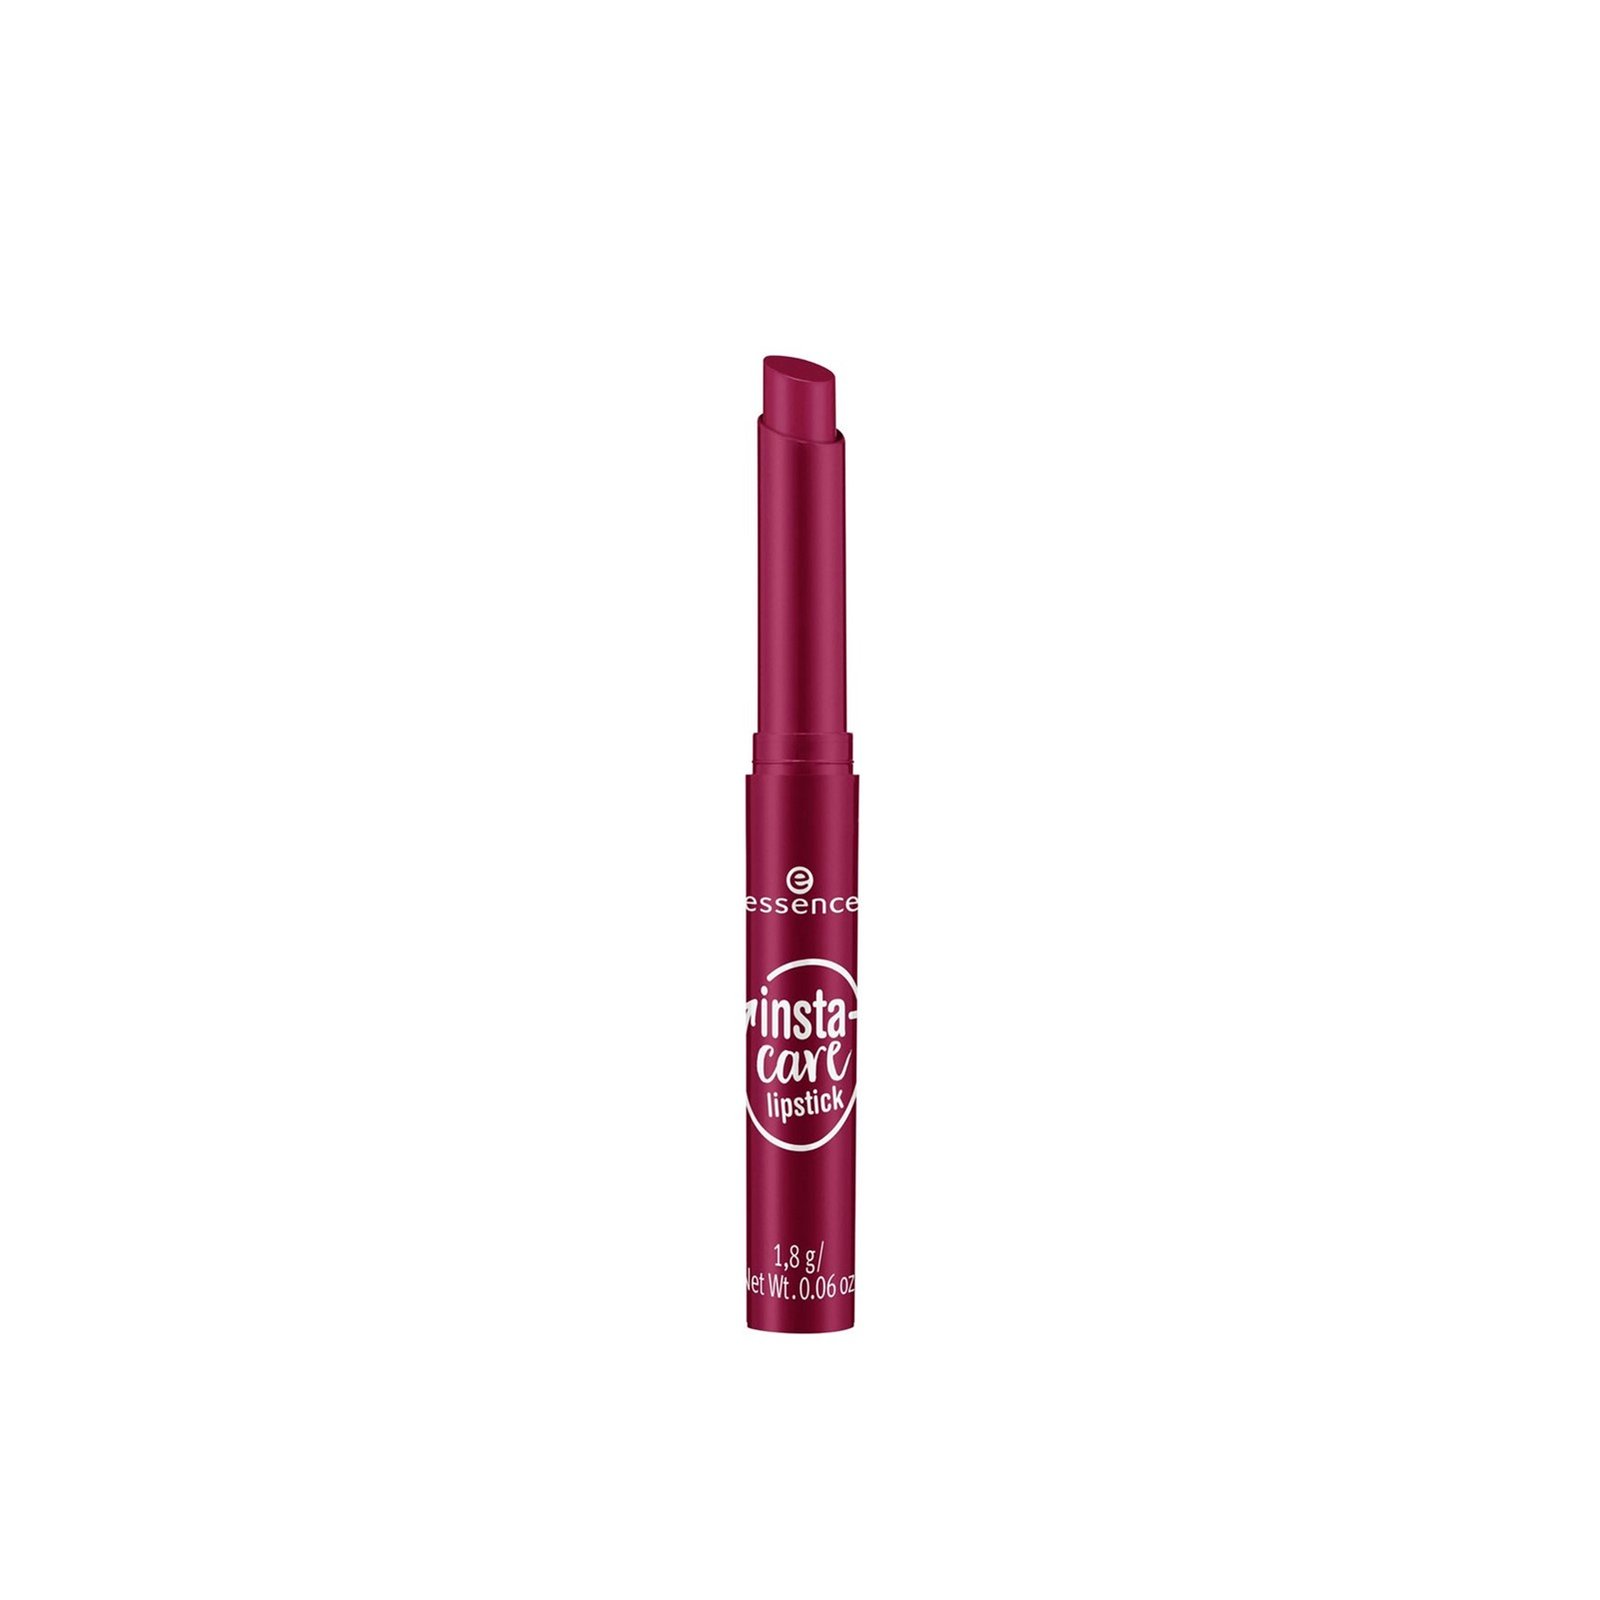 essence Insta-Care Lipstick 05 Sweet Poison 1.8g (0.06 oz)